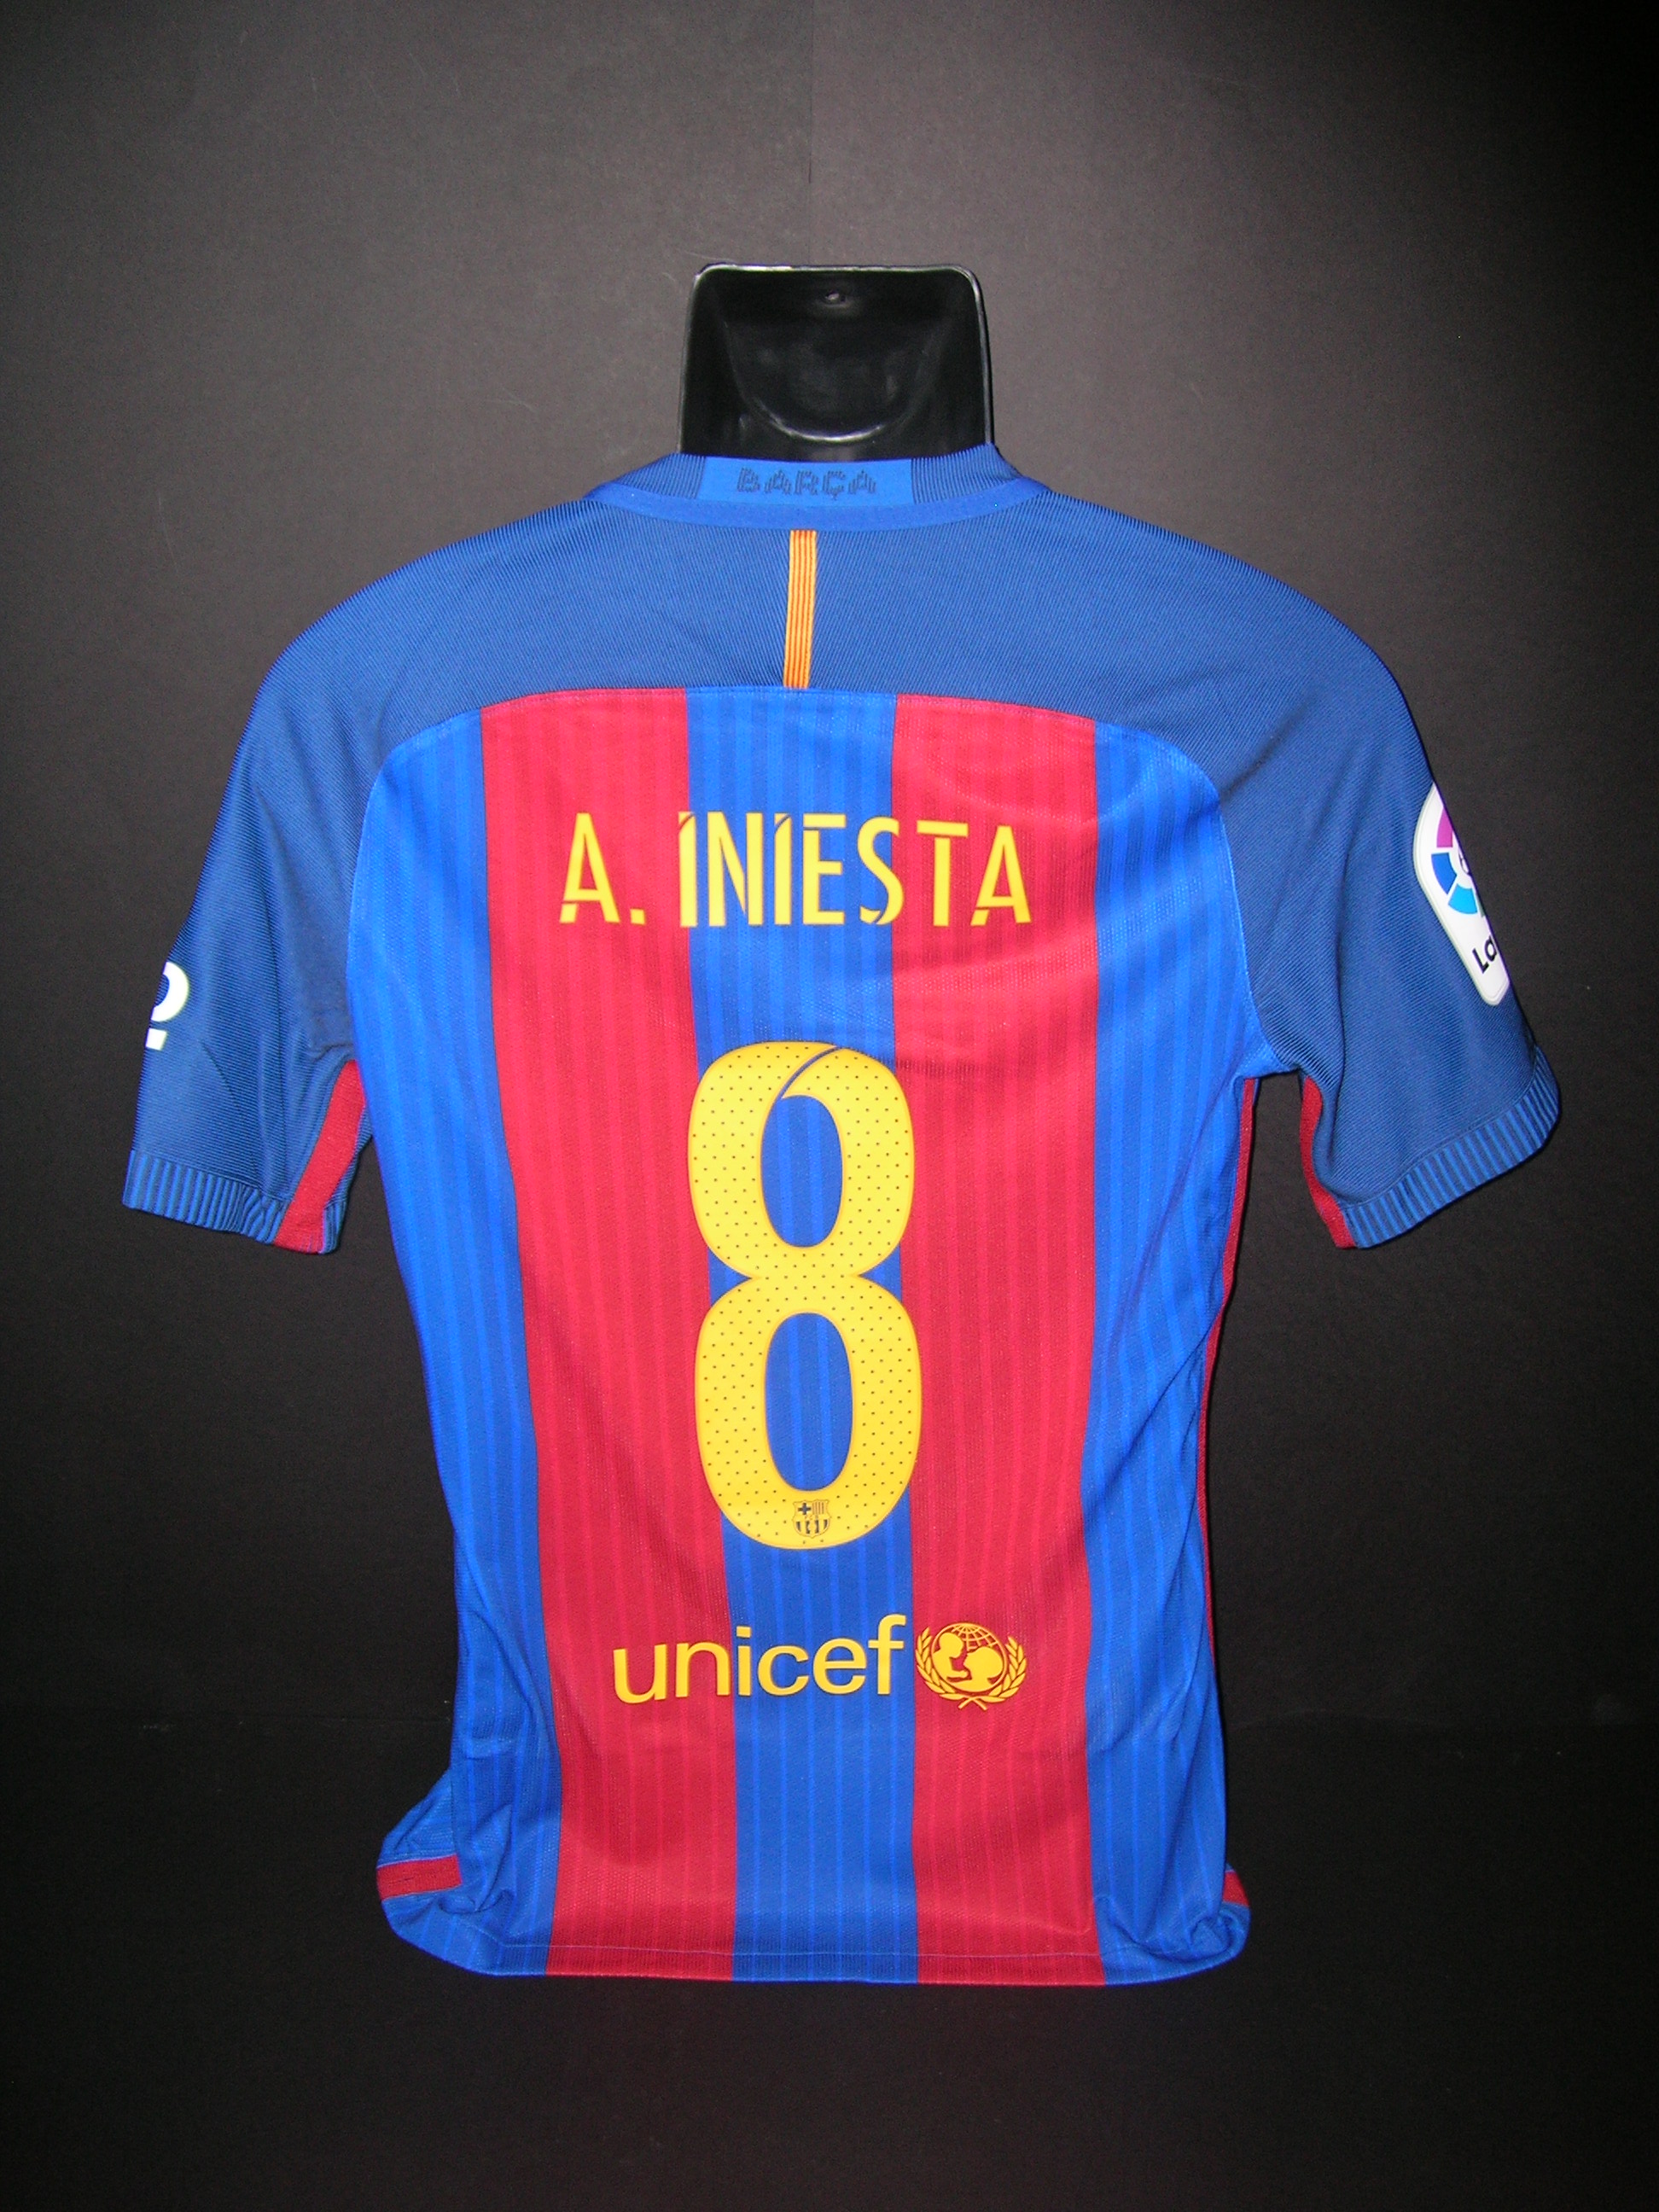 Barcellona  n.8  A. Iniesta  2016  -  448